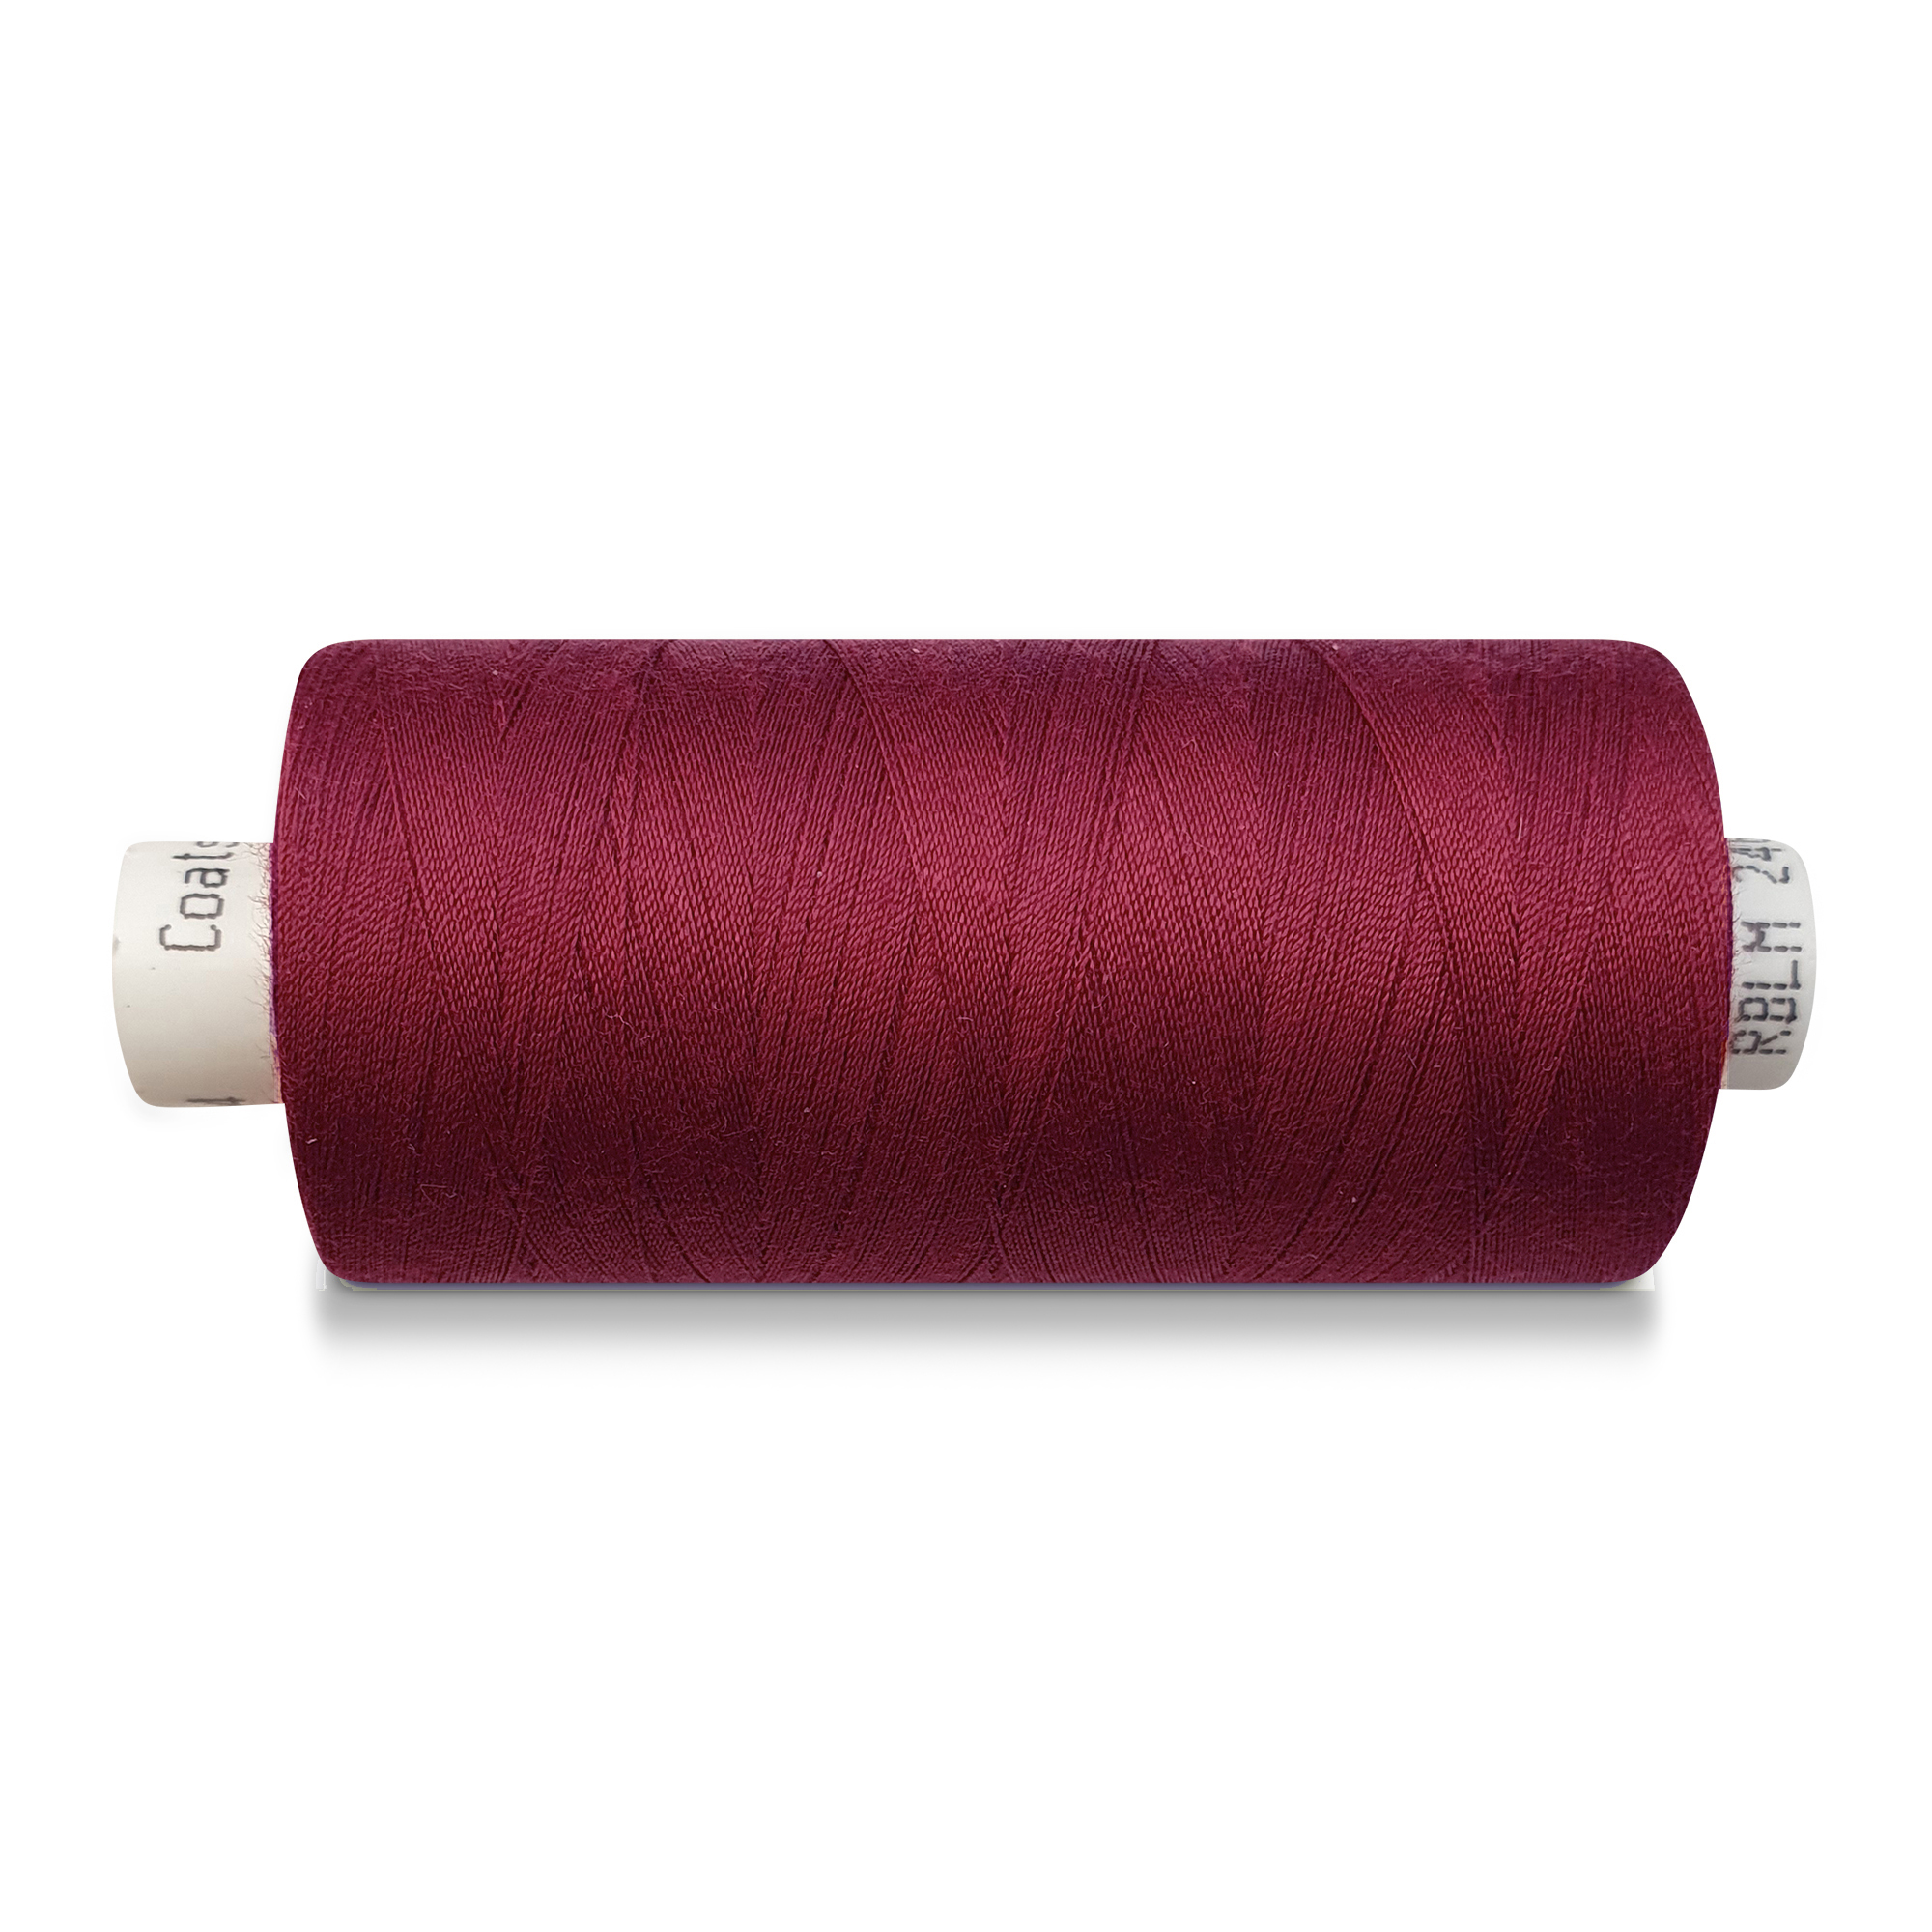 Sewing thread big, 5000m, wine red